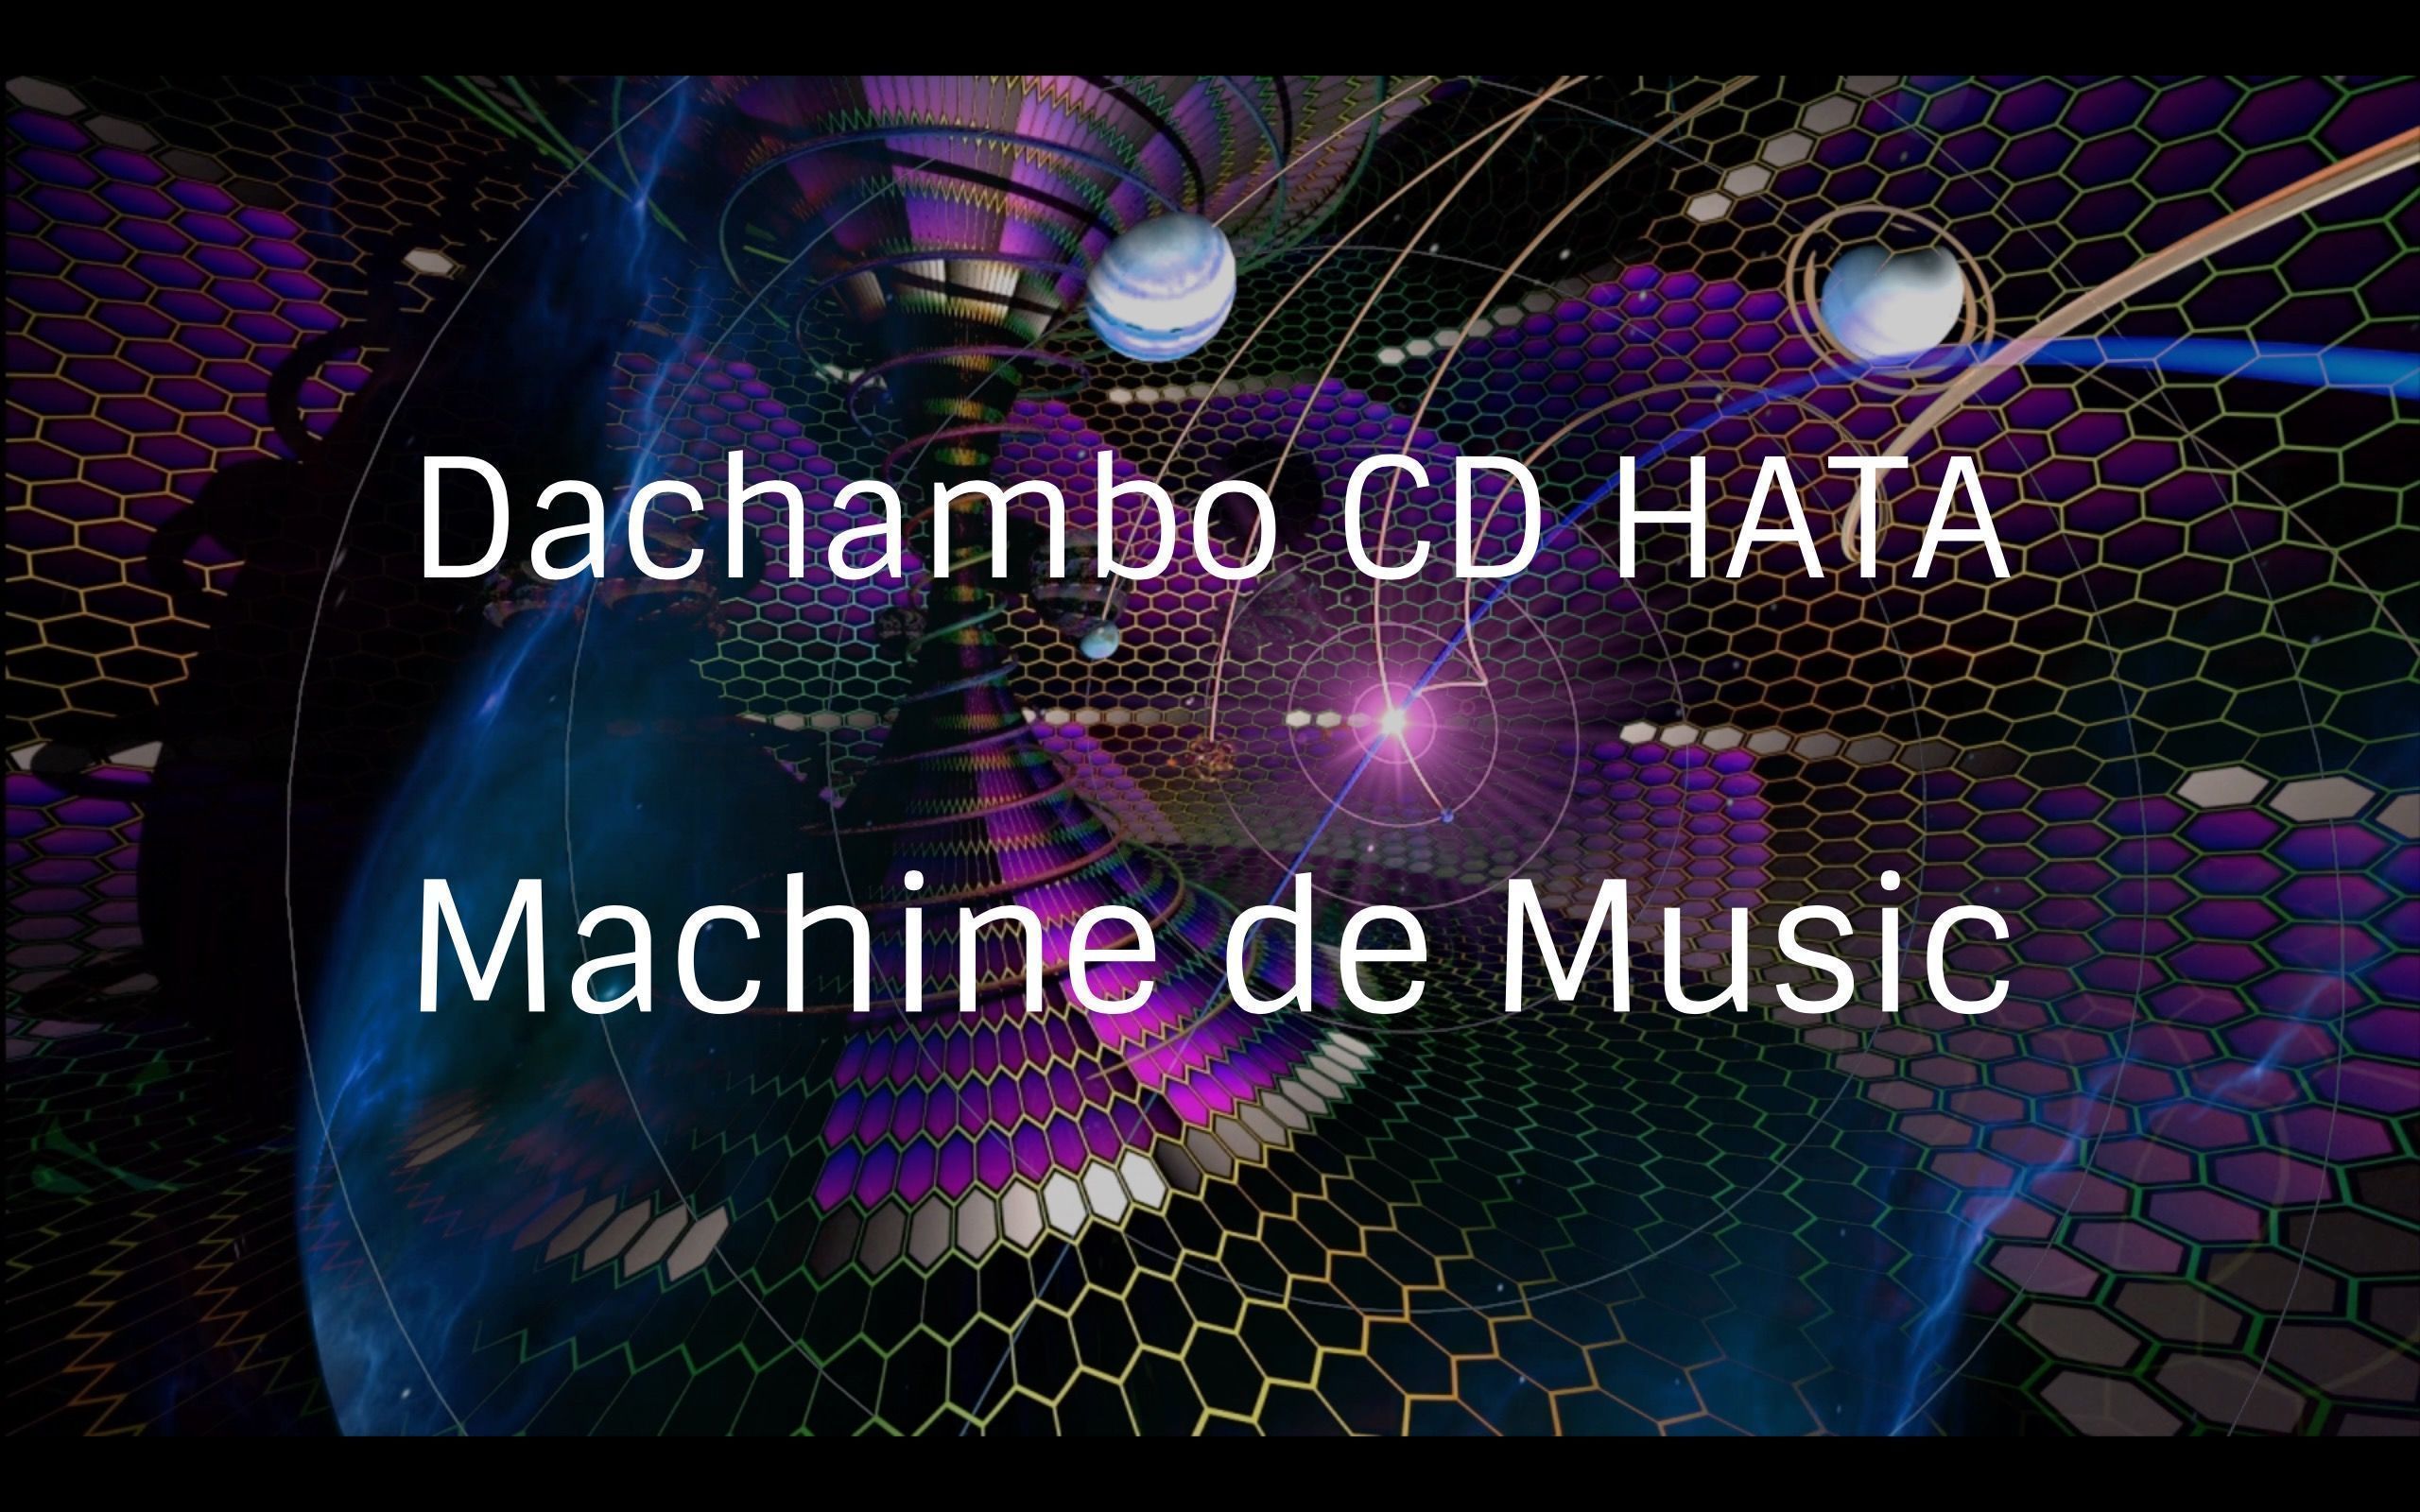 Dachambo CD HATAのMachine de Music コラムVol.54 
Calmさんと徒然なるままに